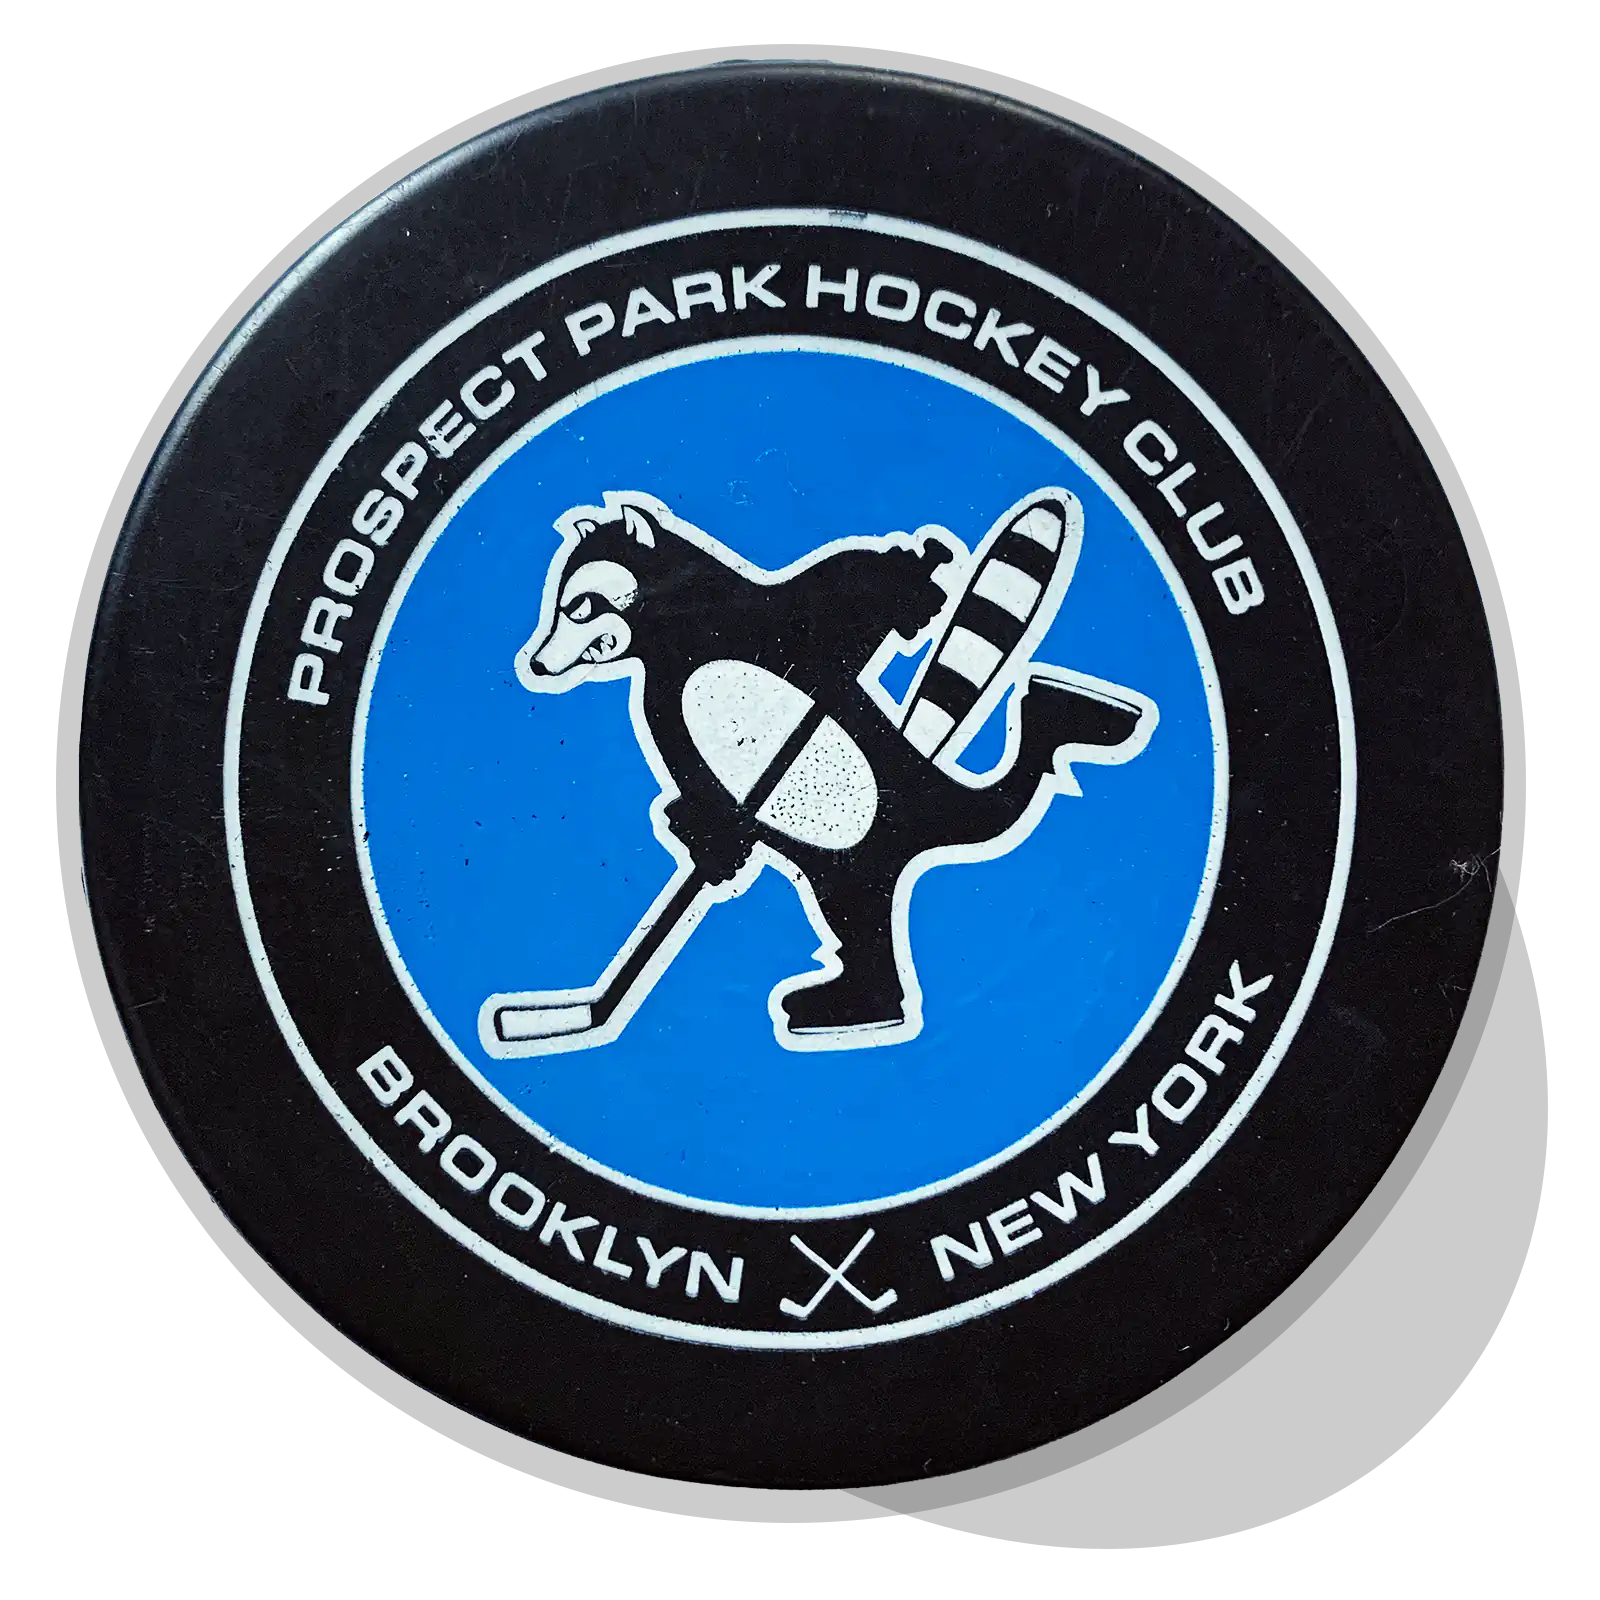 PPHC logo pn a hockey puck